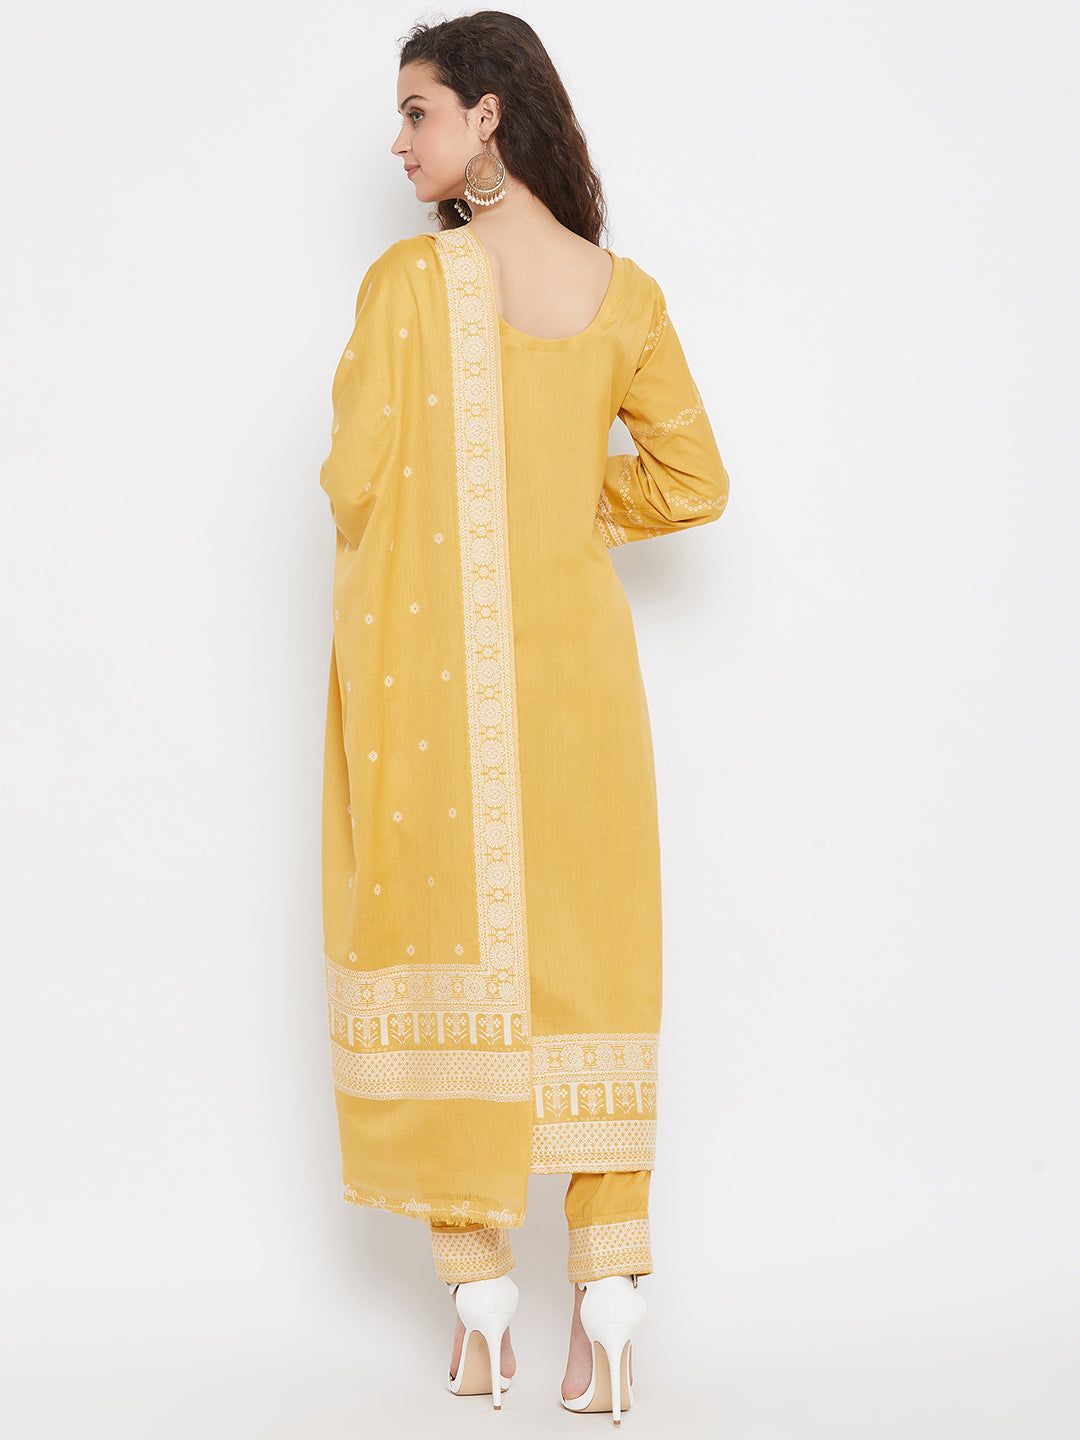 Cotton Jacquard Zari Woven Yellow Dress Material with Cotton Silk Dupatta